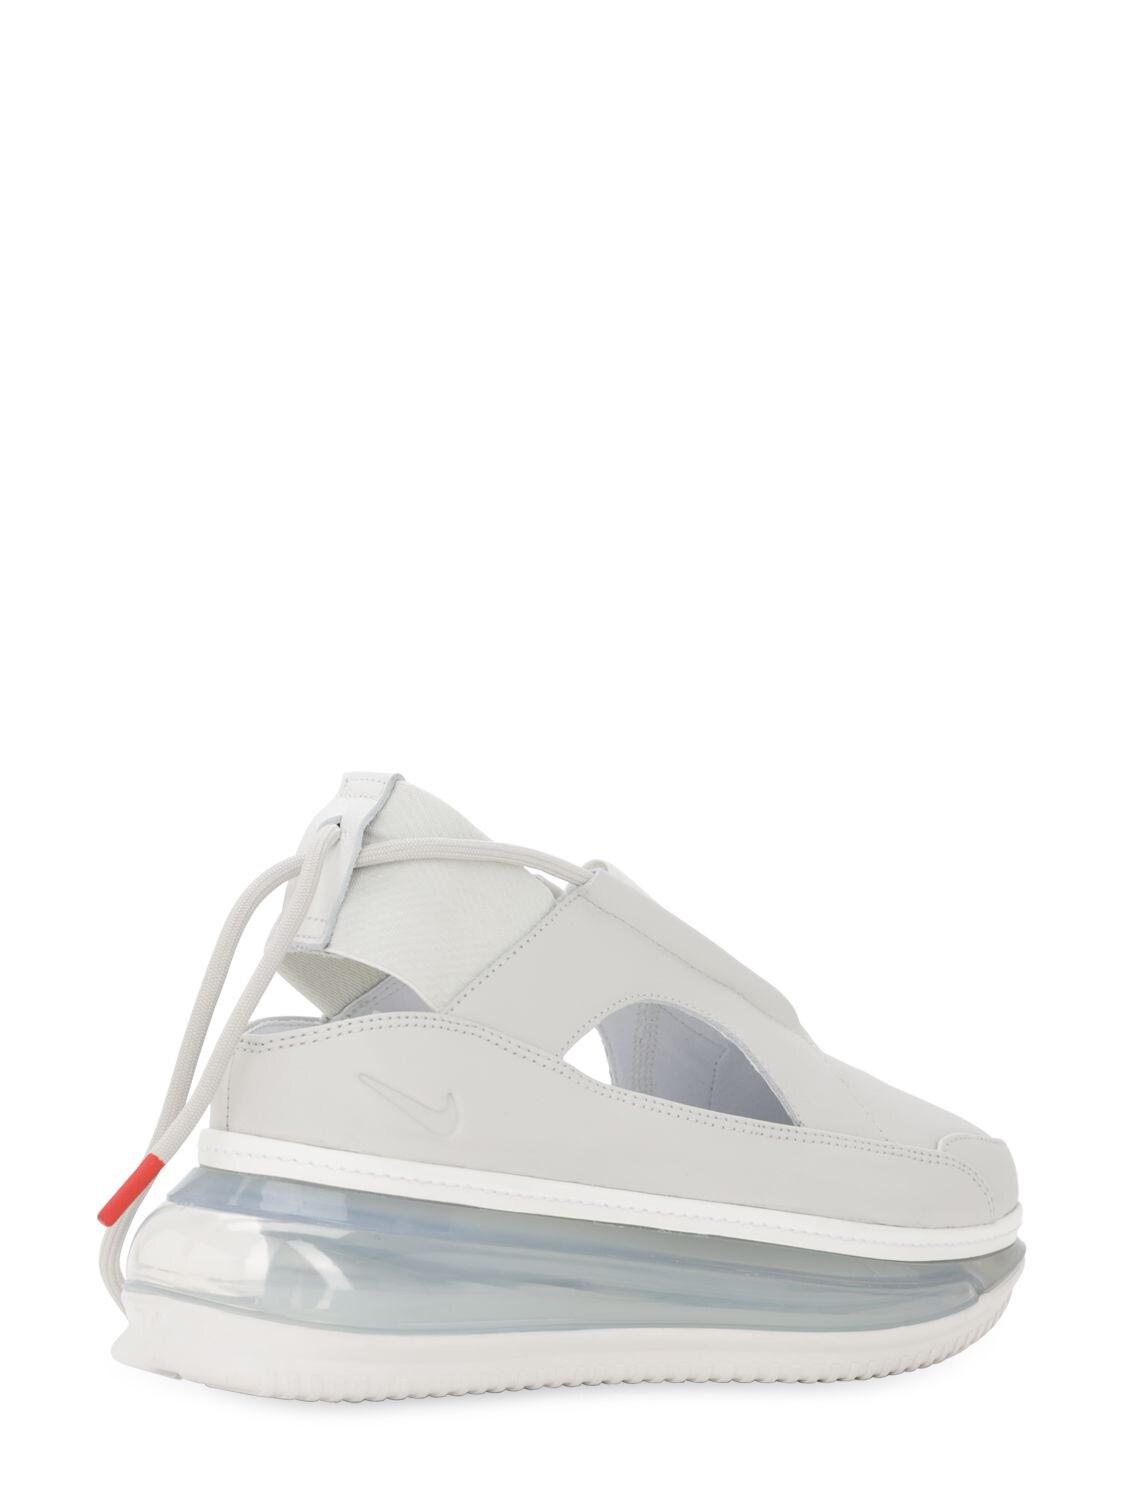 Nike W Air Max Ff 720 Sneakers in White | Lyst Australia